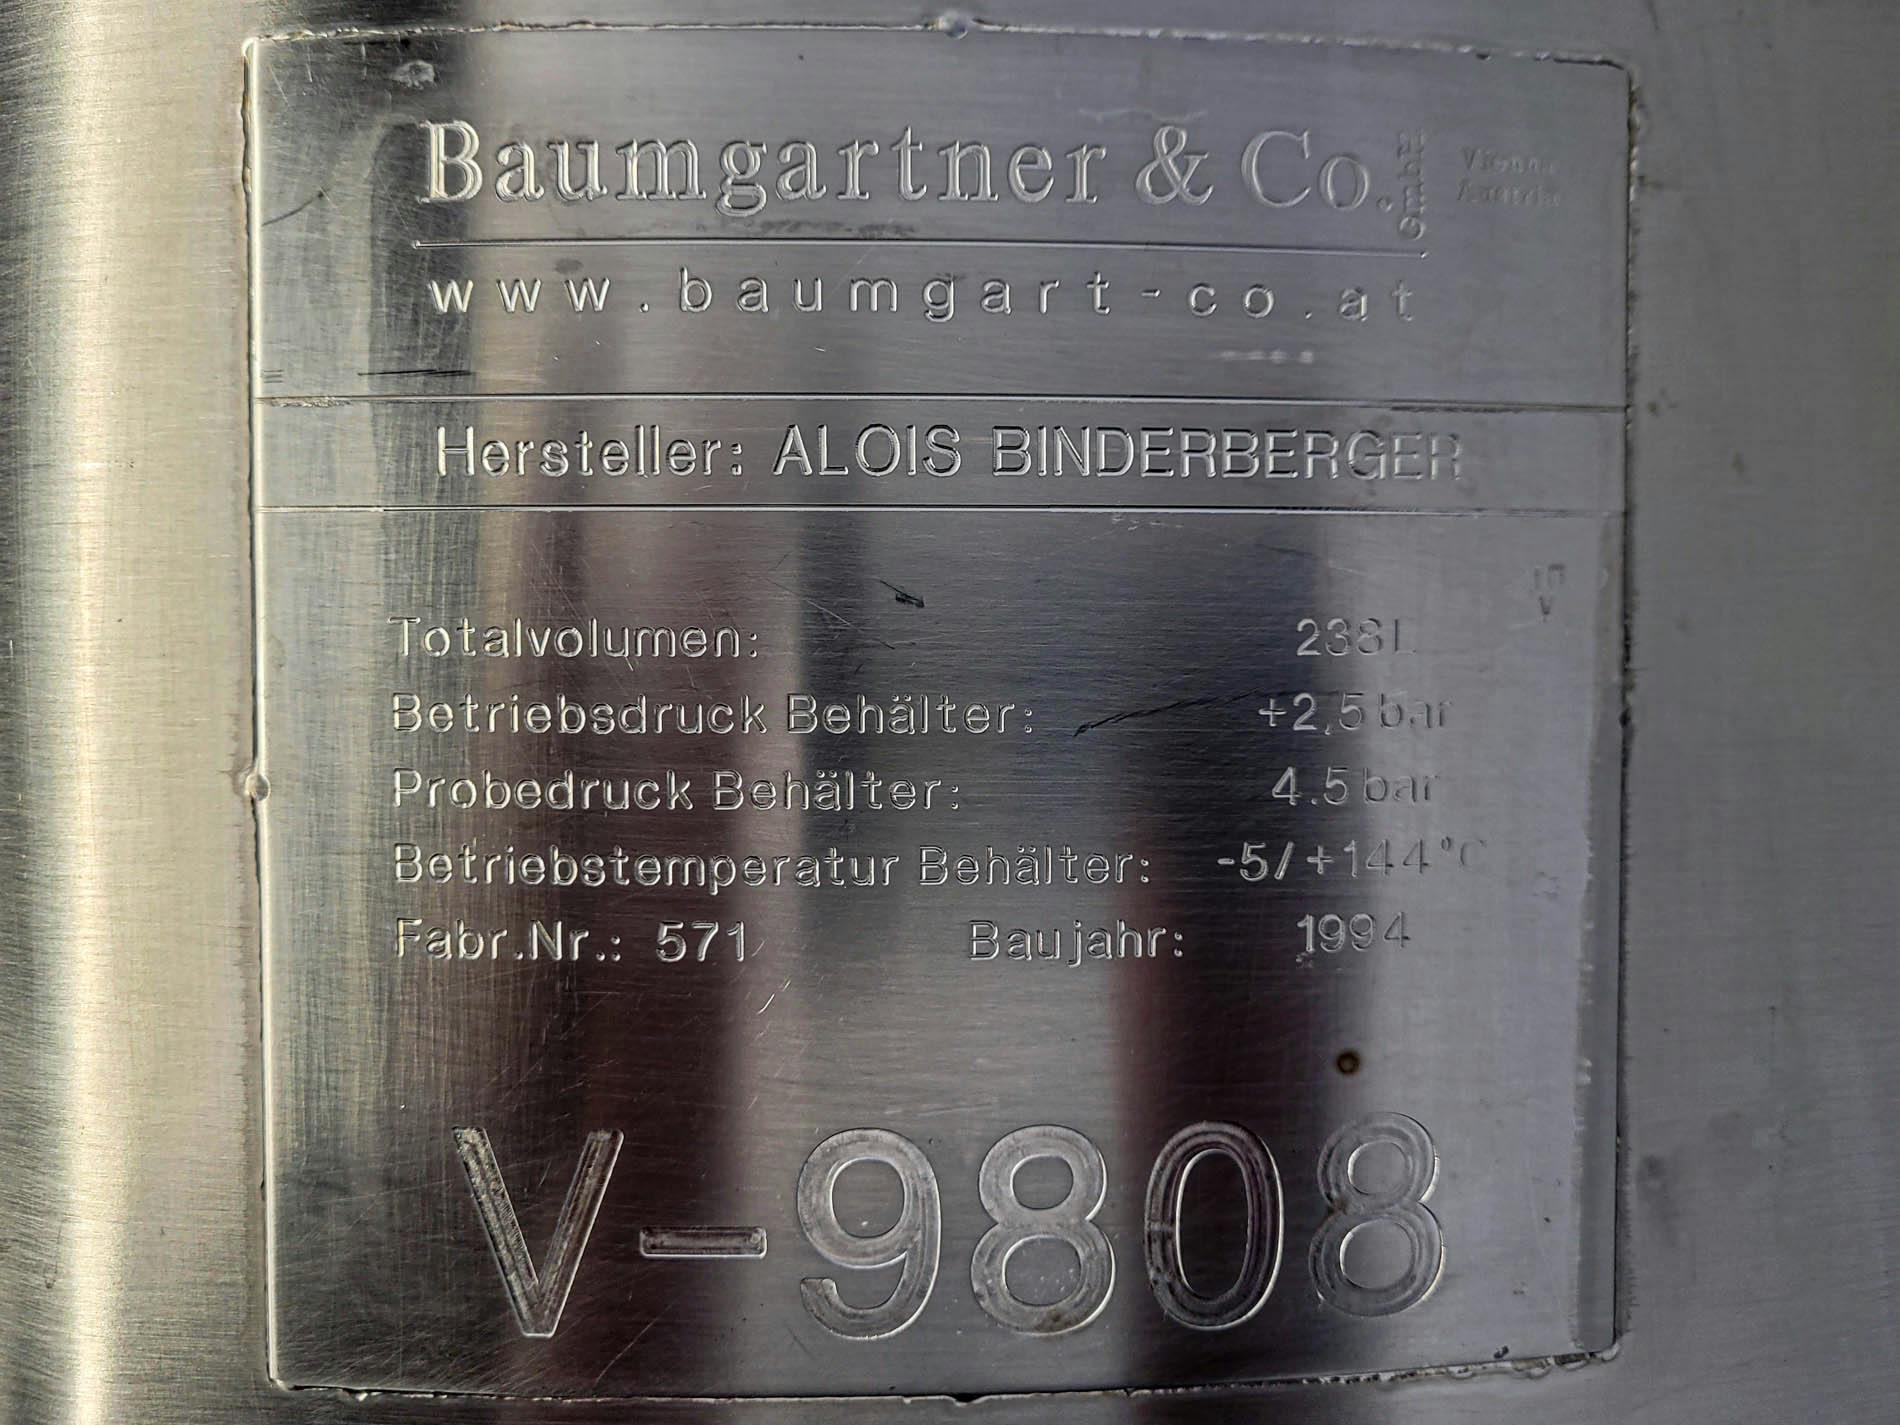 Baumgartner 238 Ltr. - Zbiornik ciśnieniowy - image 11